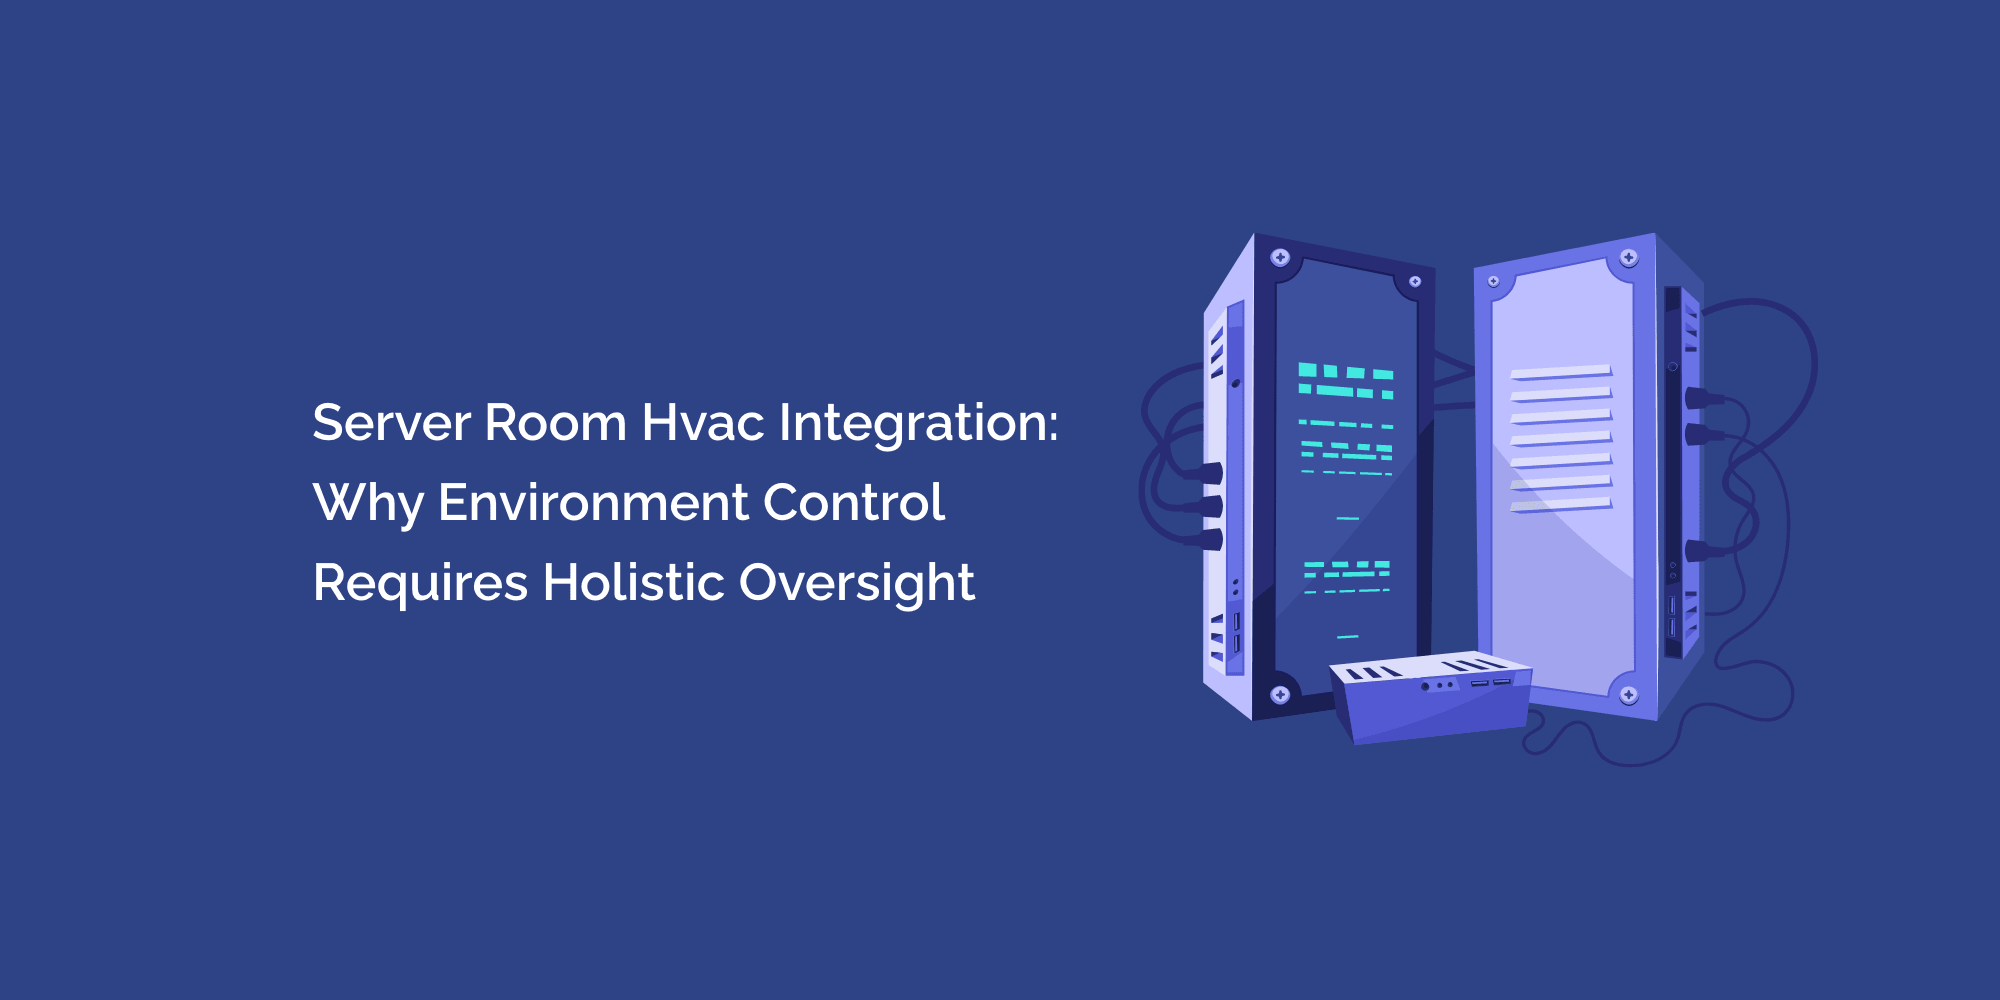 Server Room HVAC Integration: Why Environment Control Requires Holistic Oversight